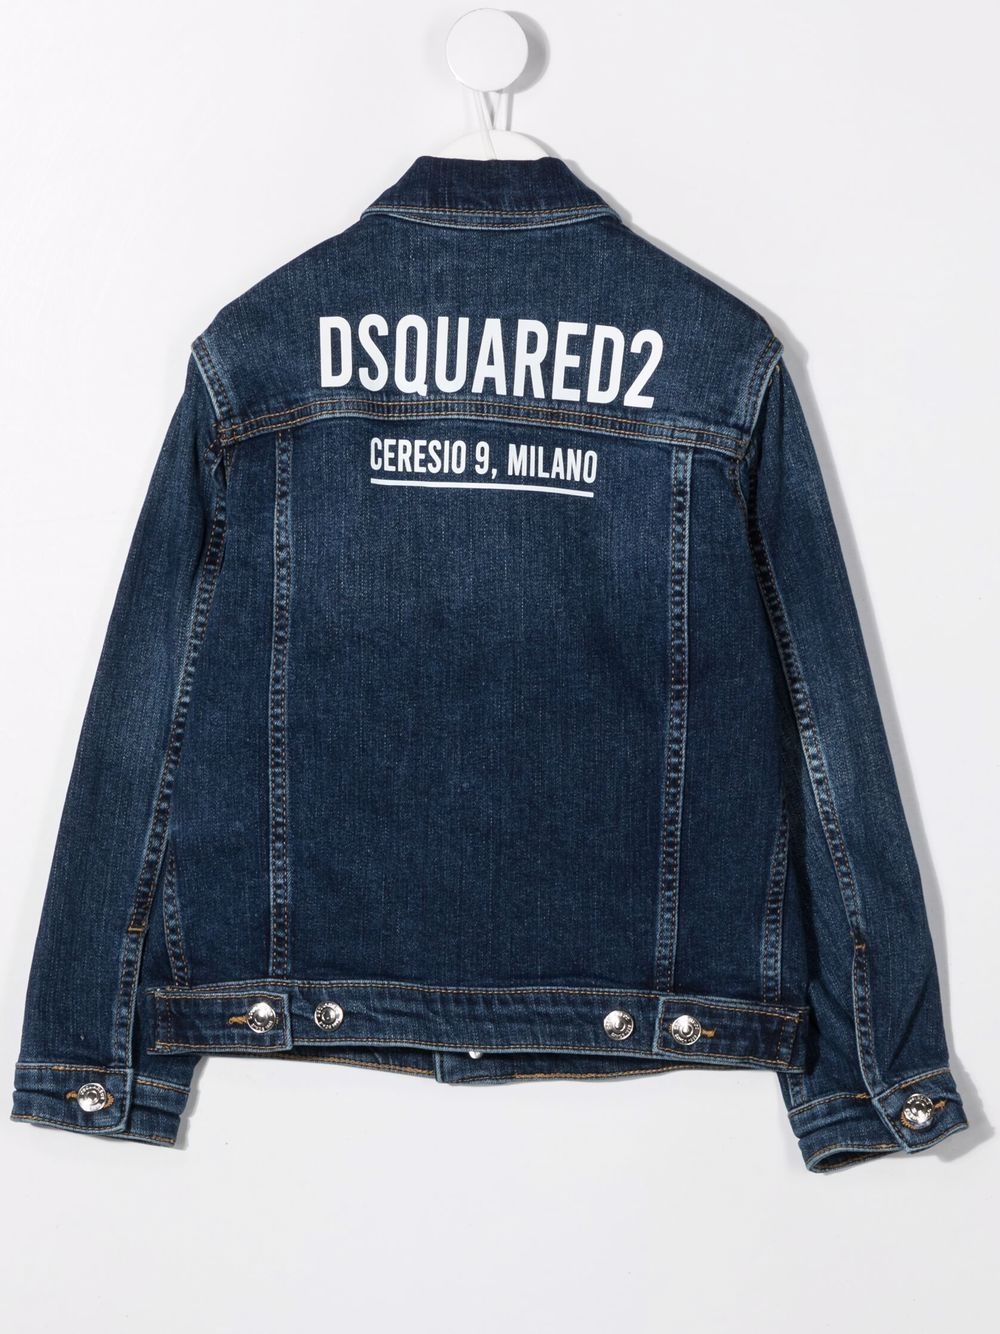 фото Dsquared2 kids джинсовая куртка с логотипом